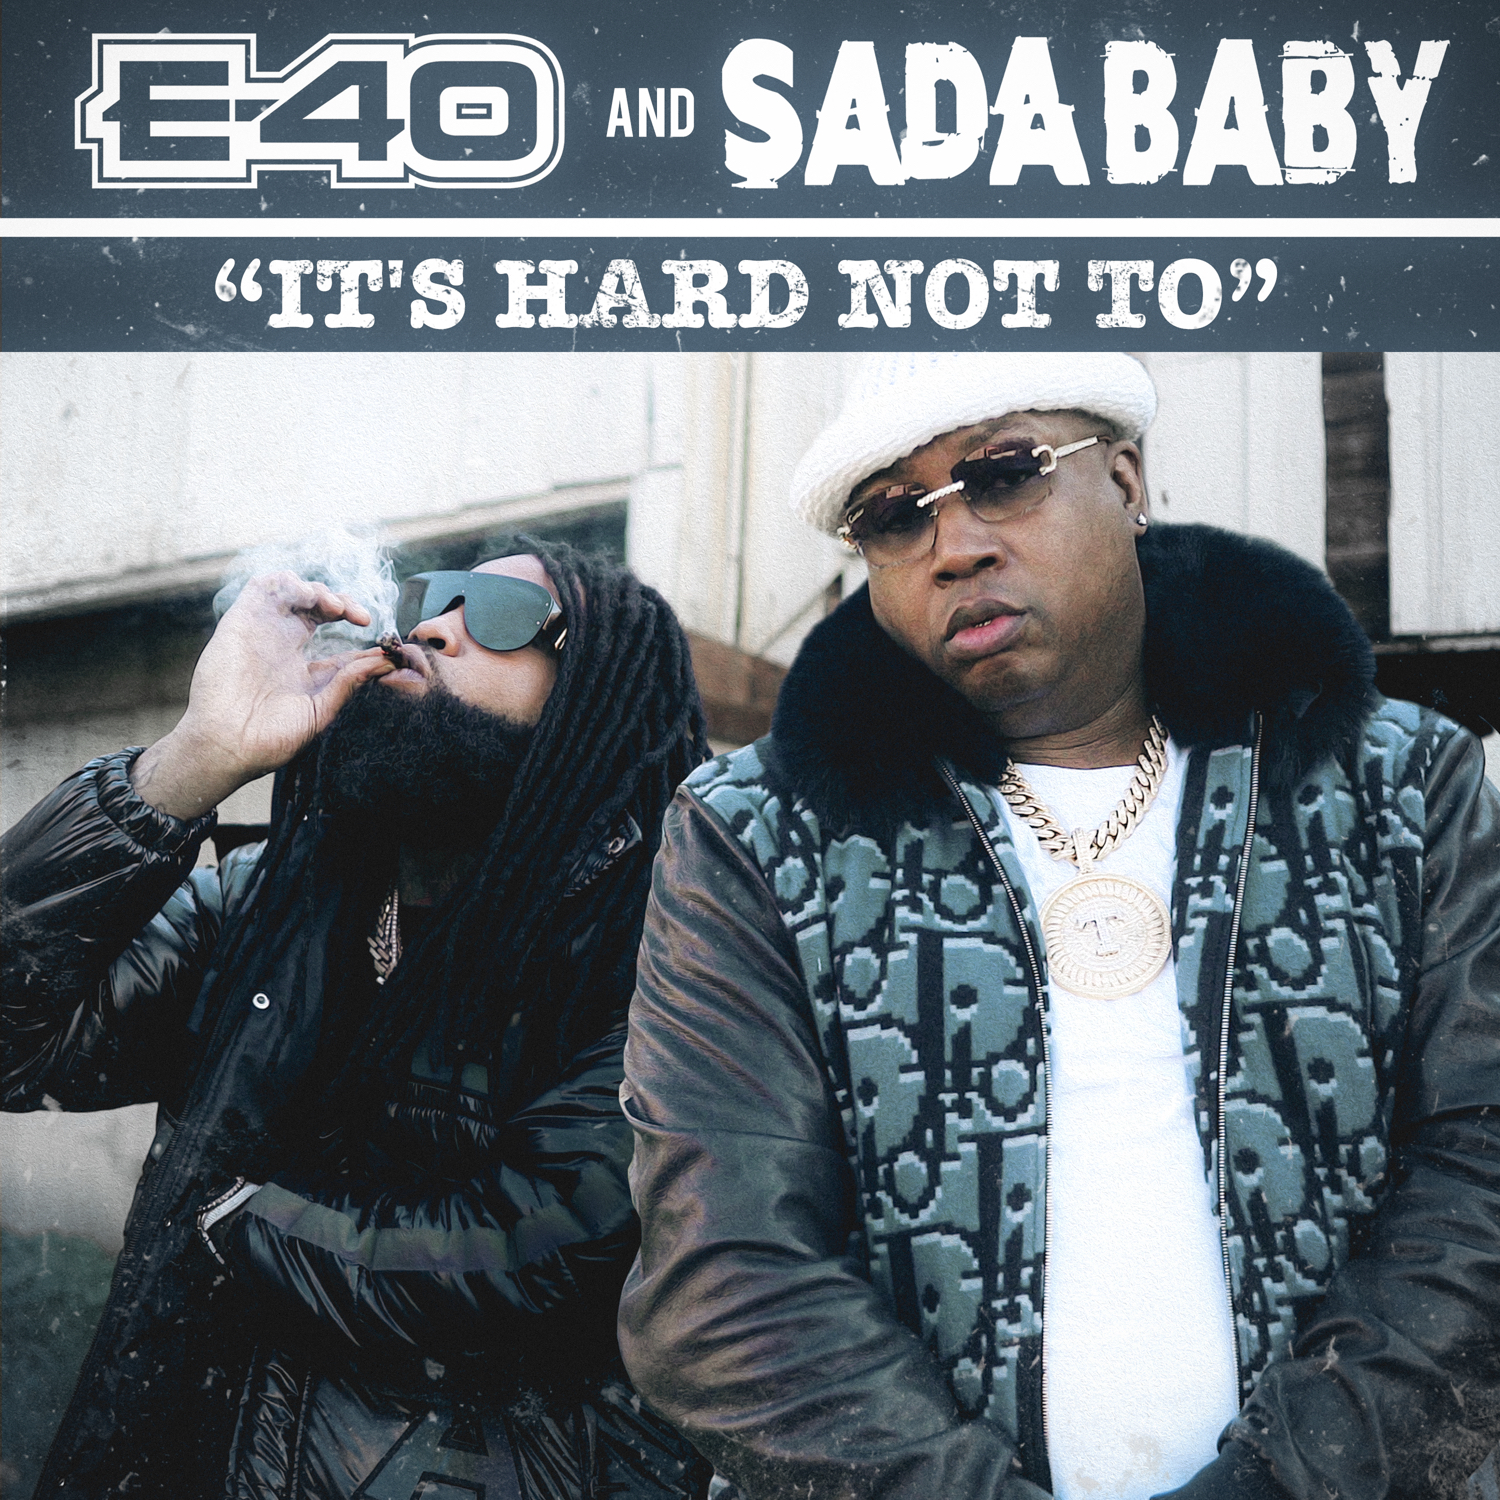 Album: E-40 'Rule Of Thumb' - Rap Radar